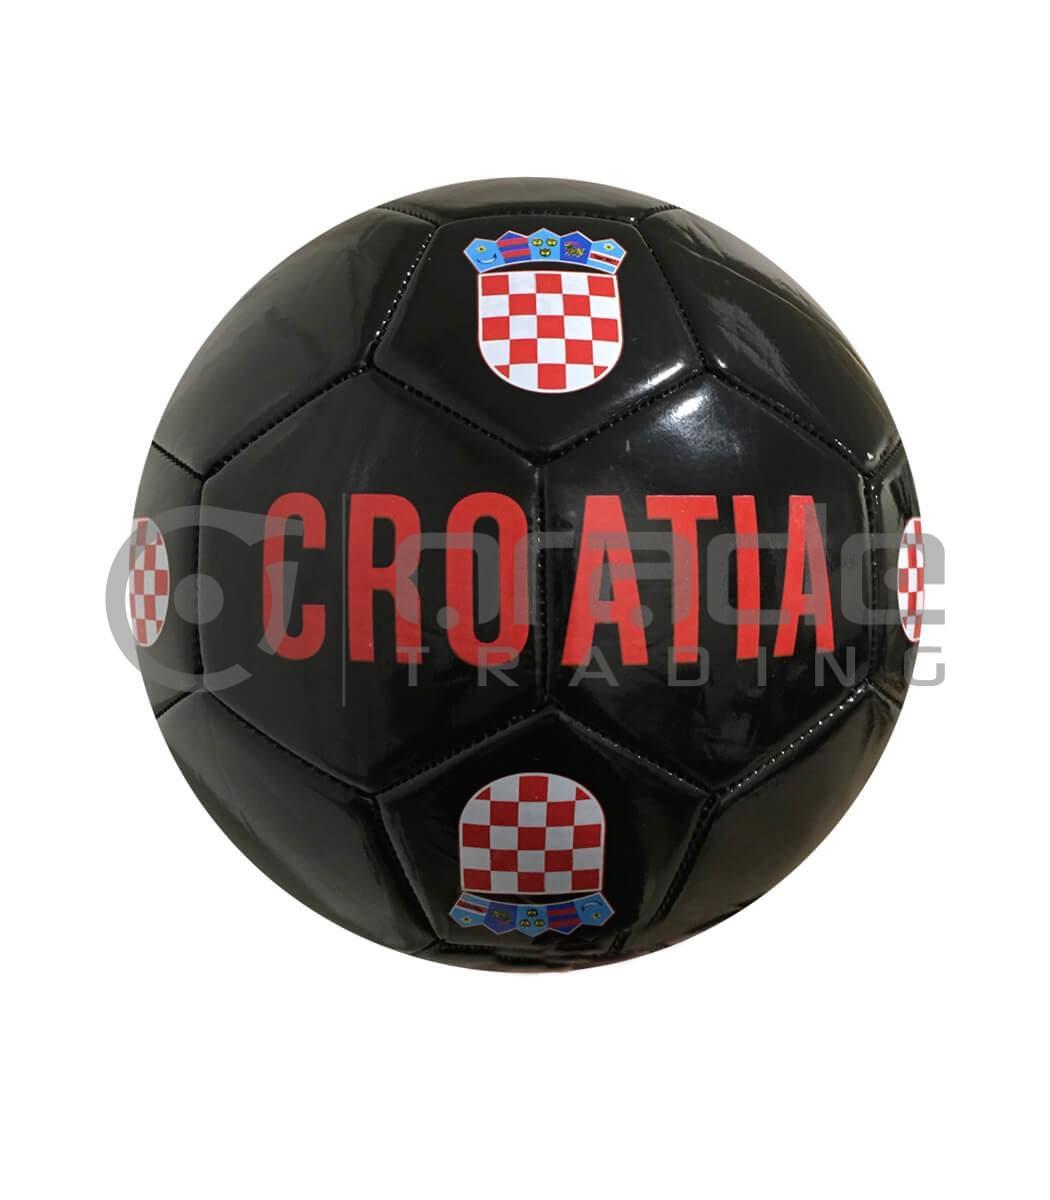 Croatia Large Soccer Ball - Black